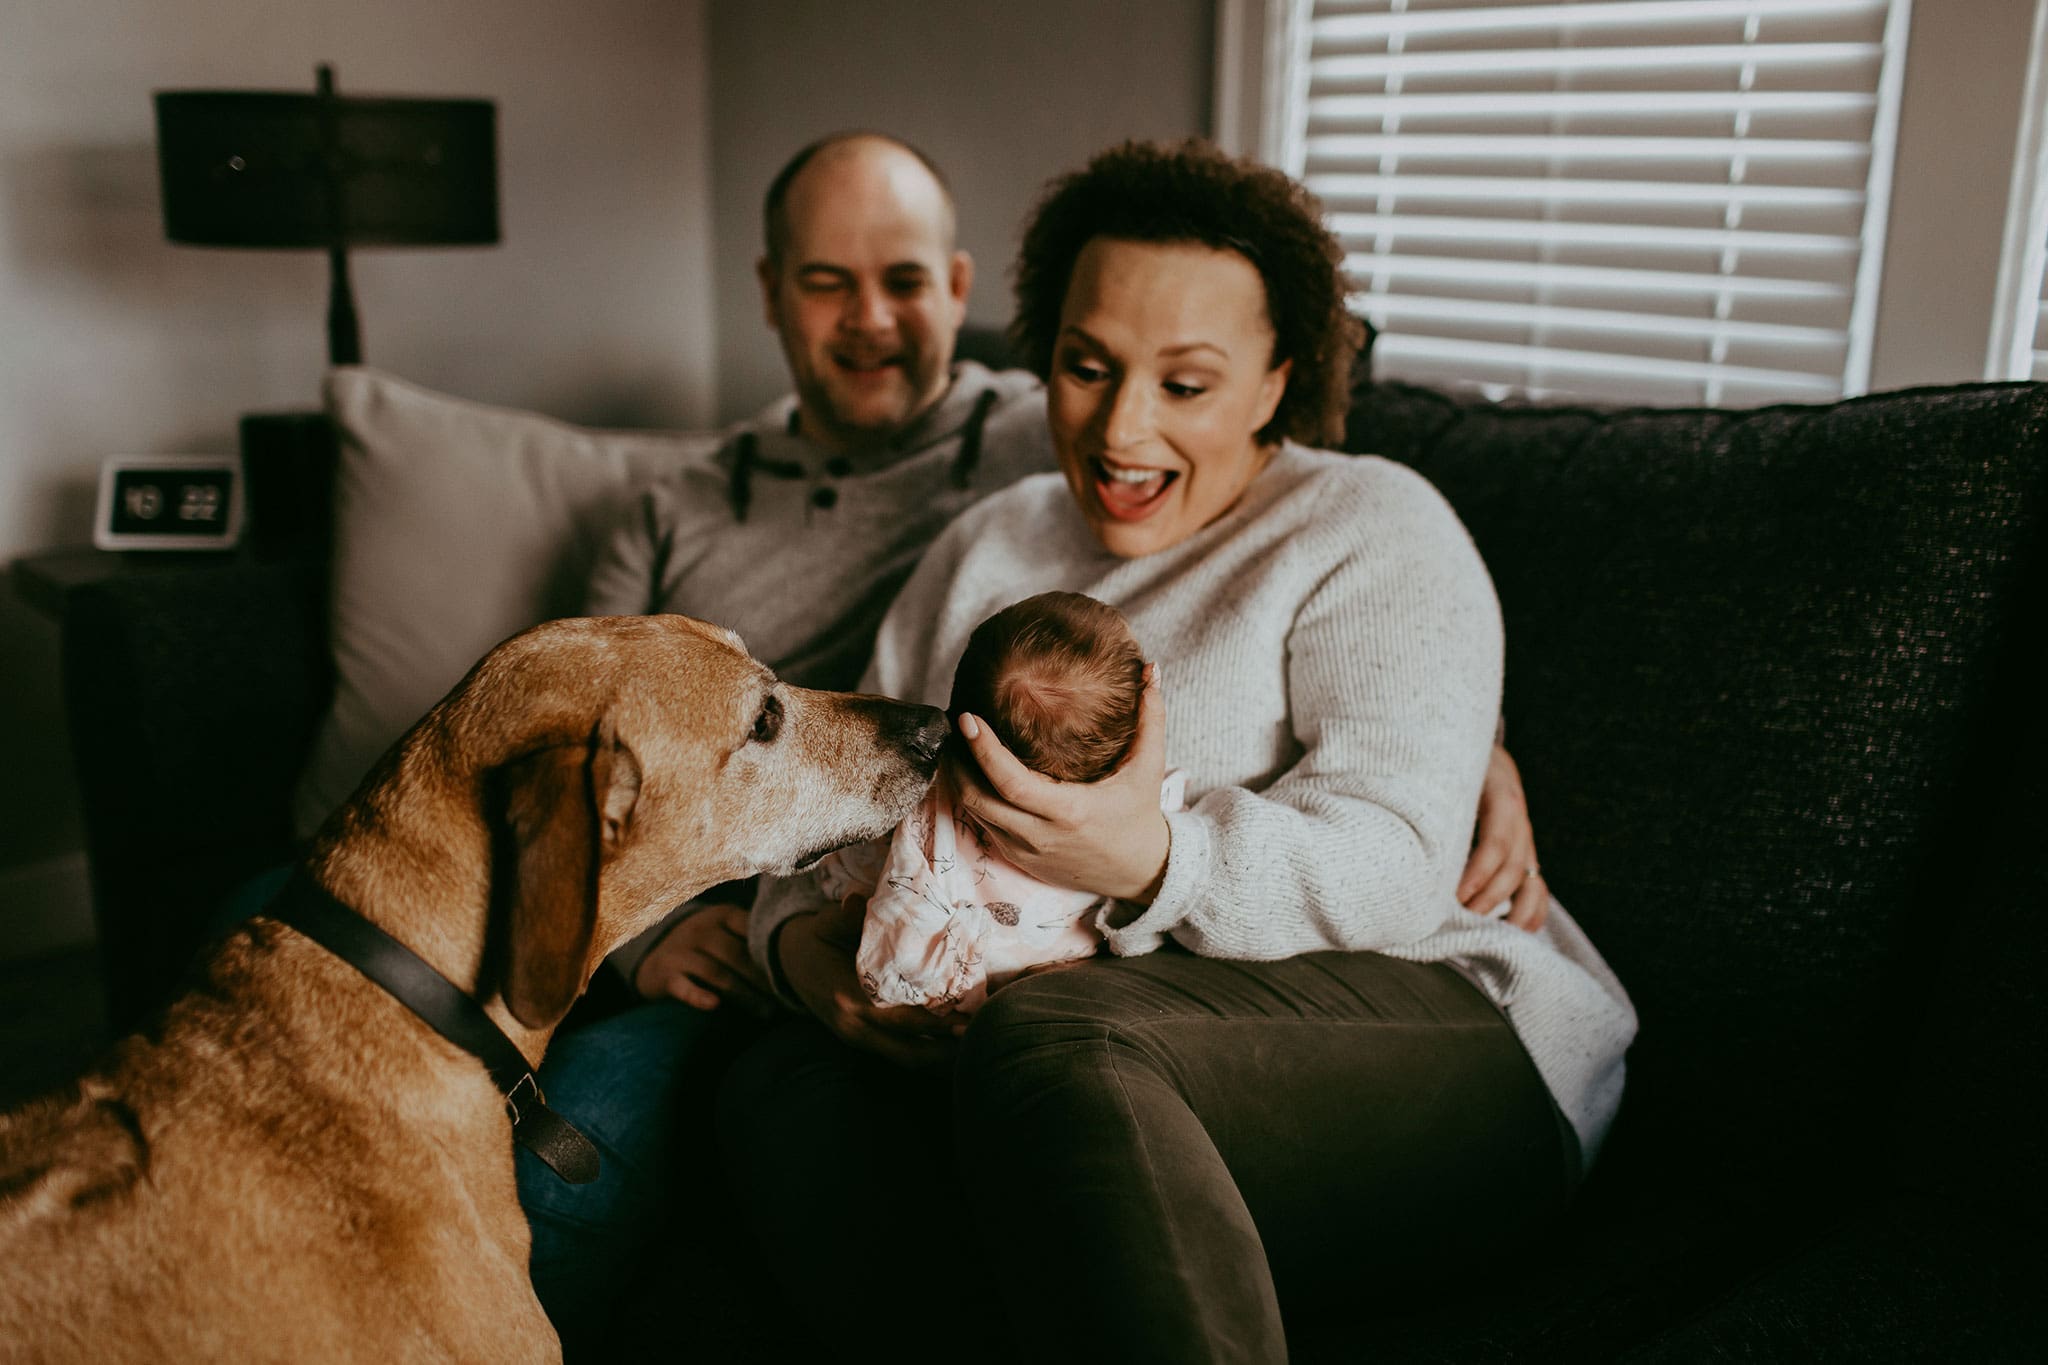 mom, dad, newborn baby, and dog